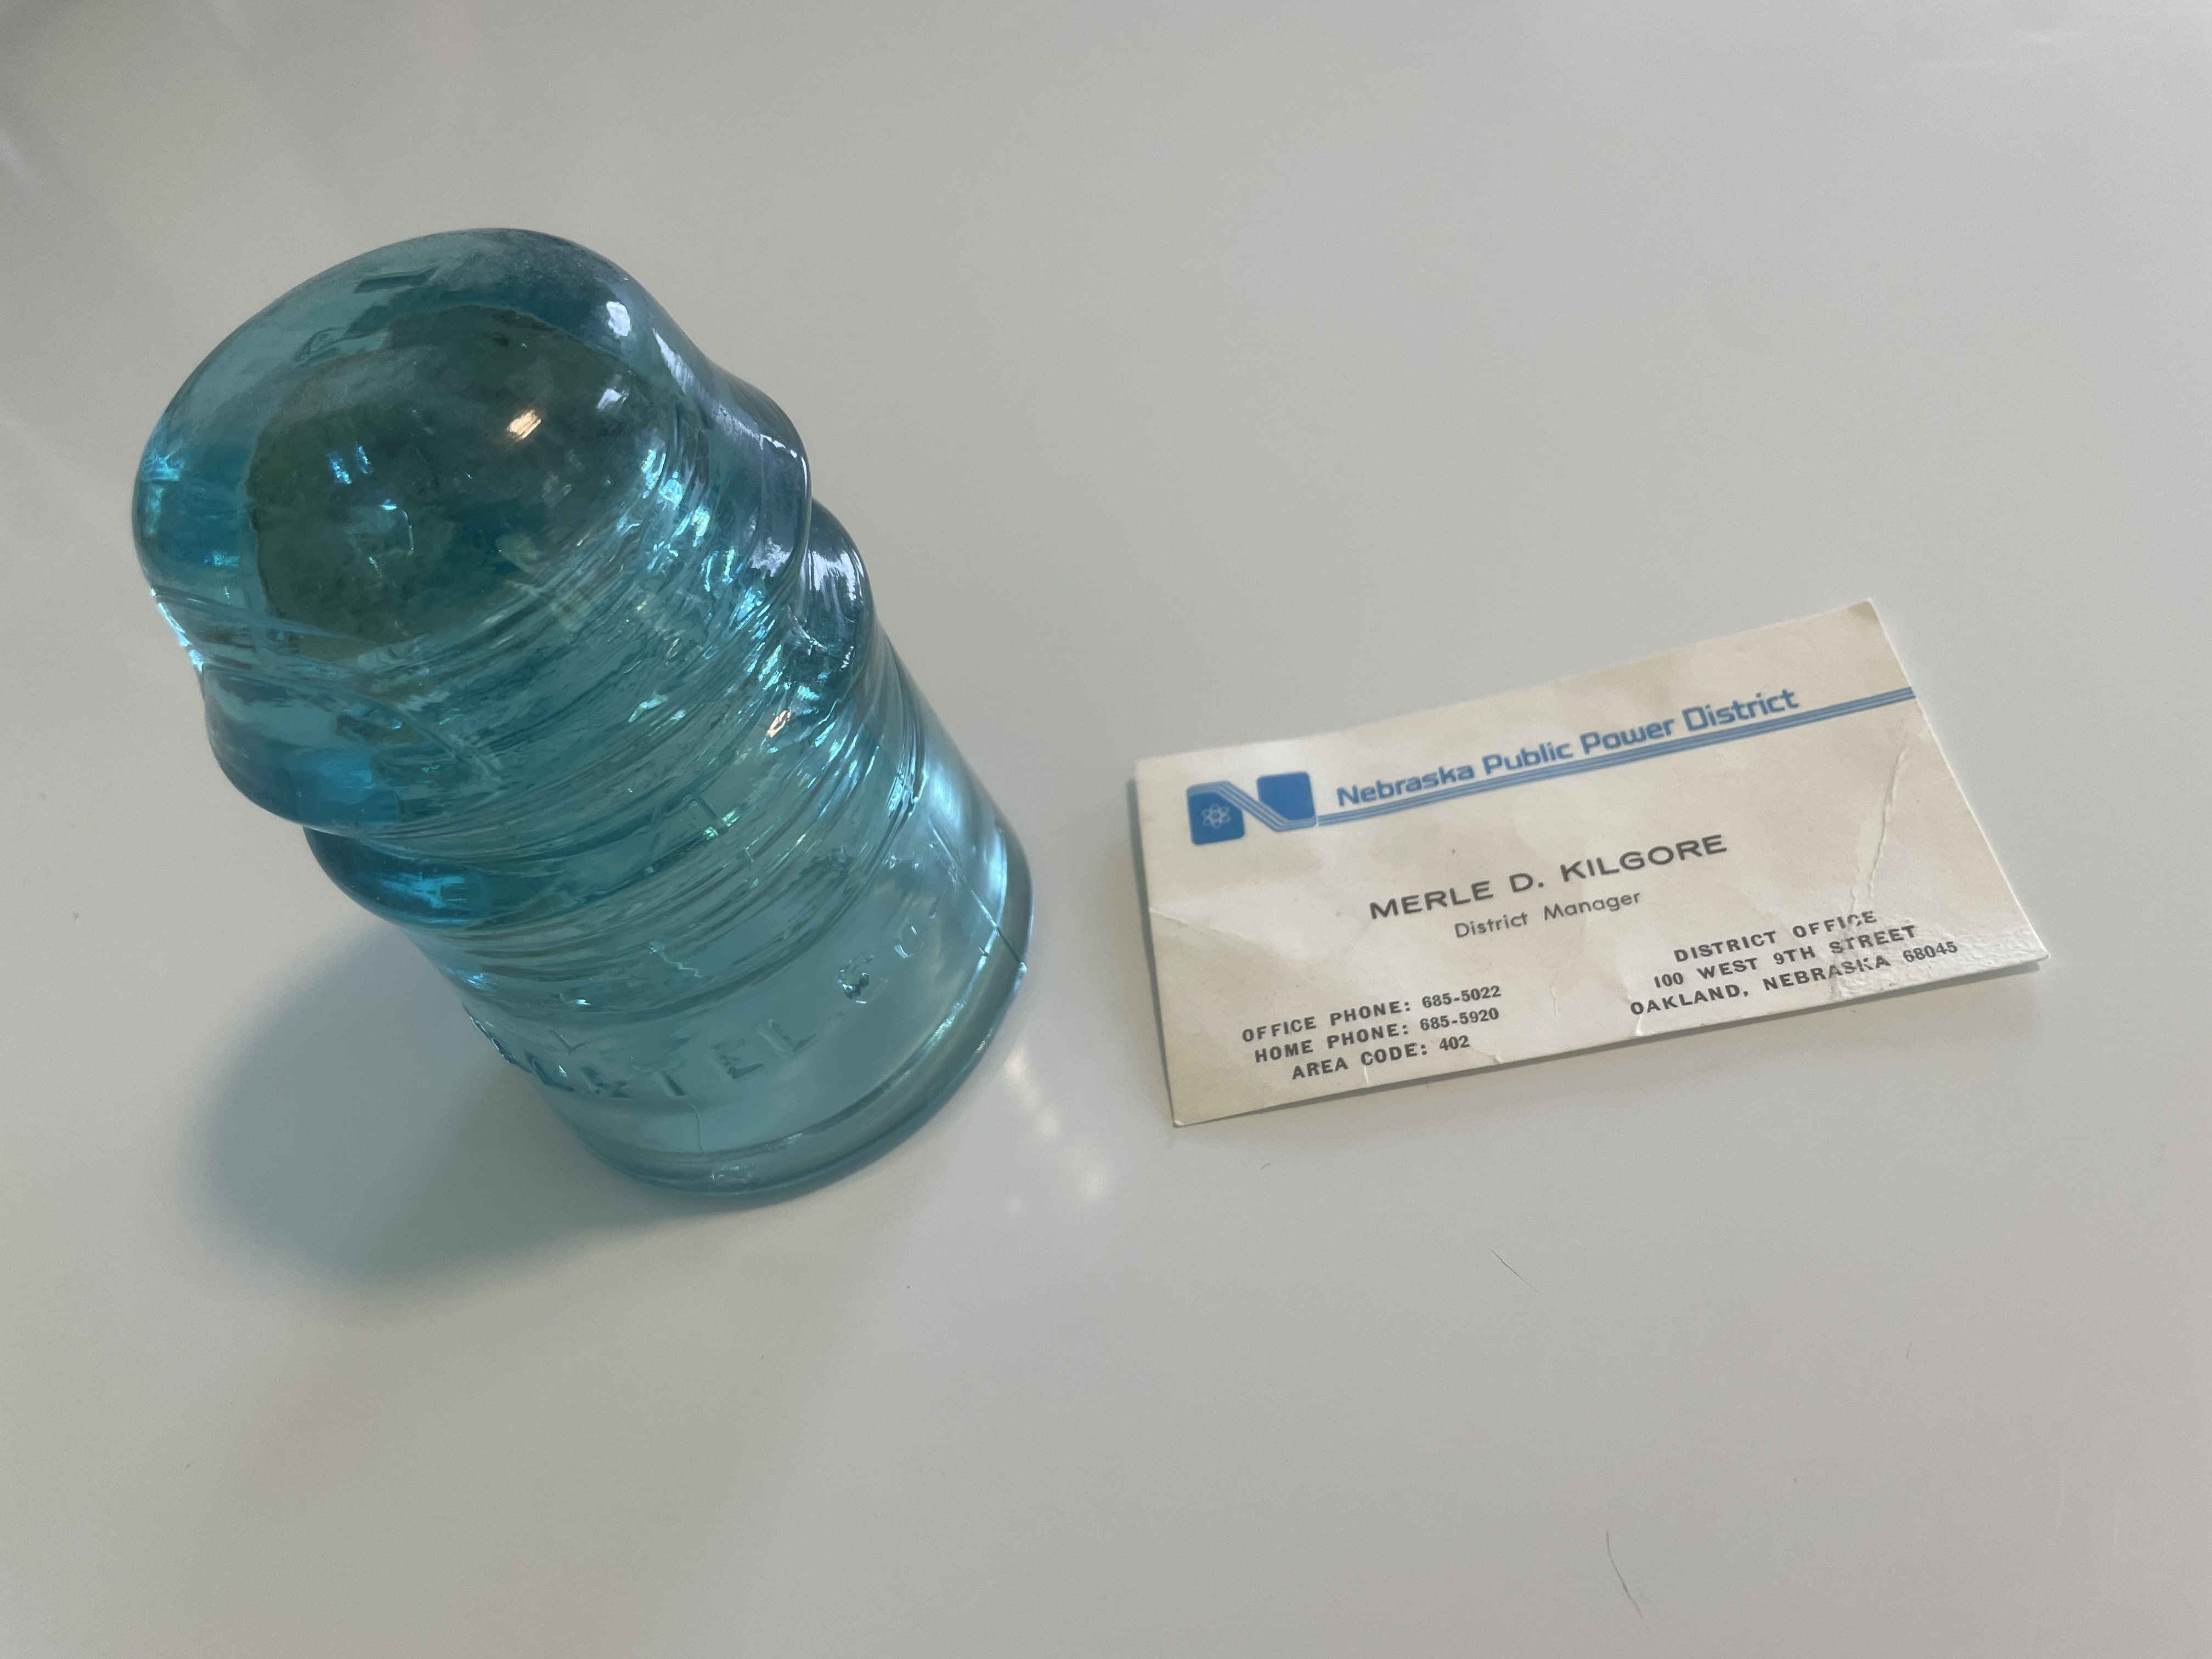 A blue glass insulator next to a business card of Merle D. Kilgore, District Manager, Nebraska Public Power District